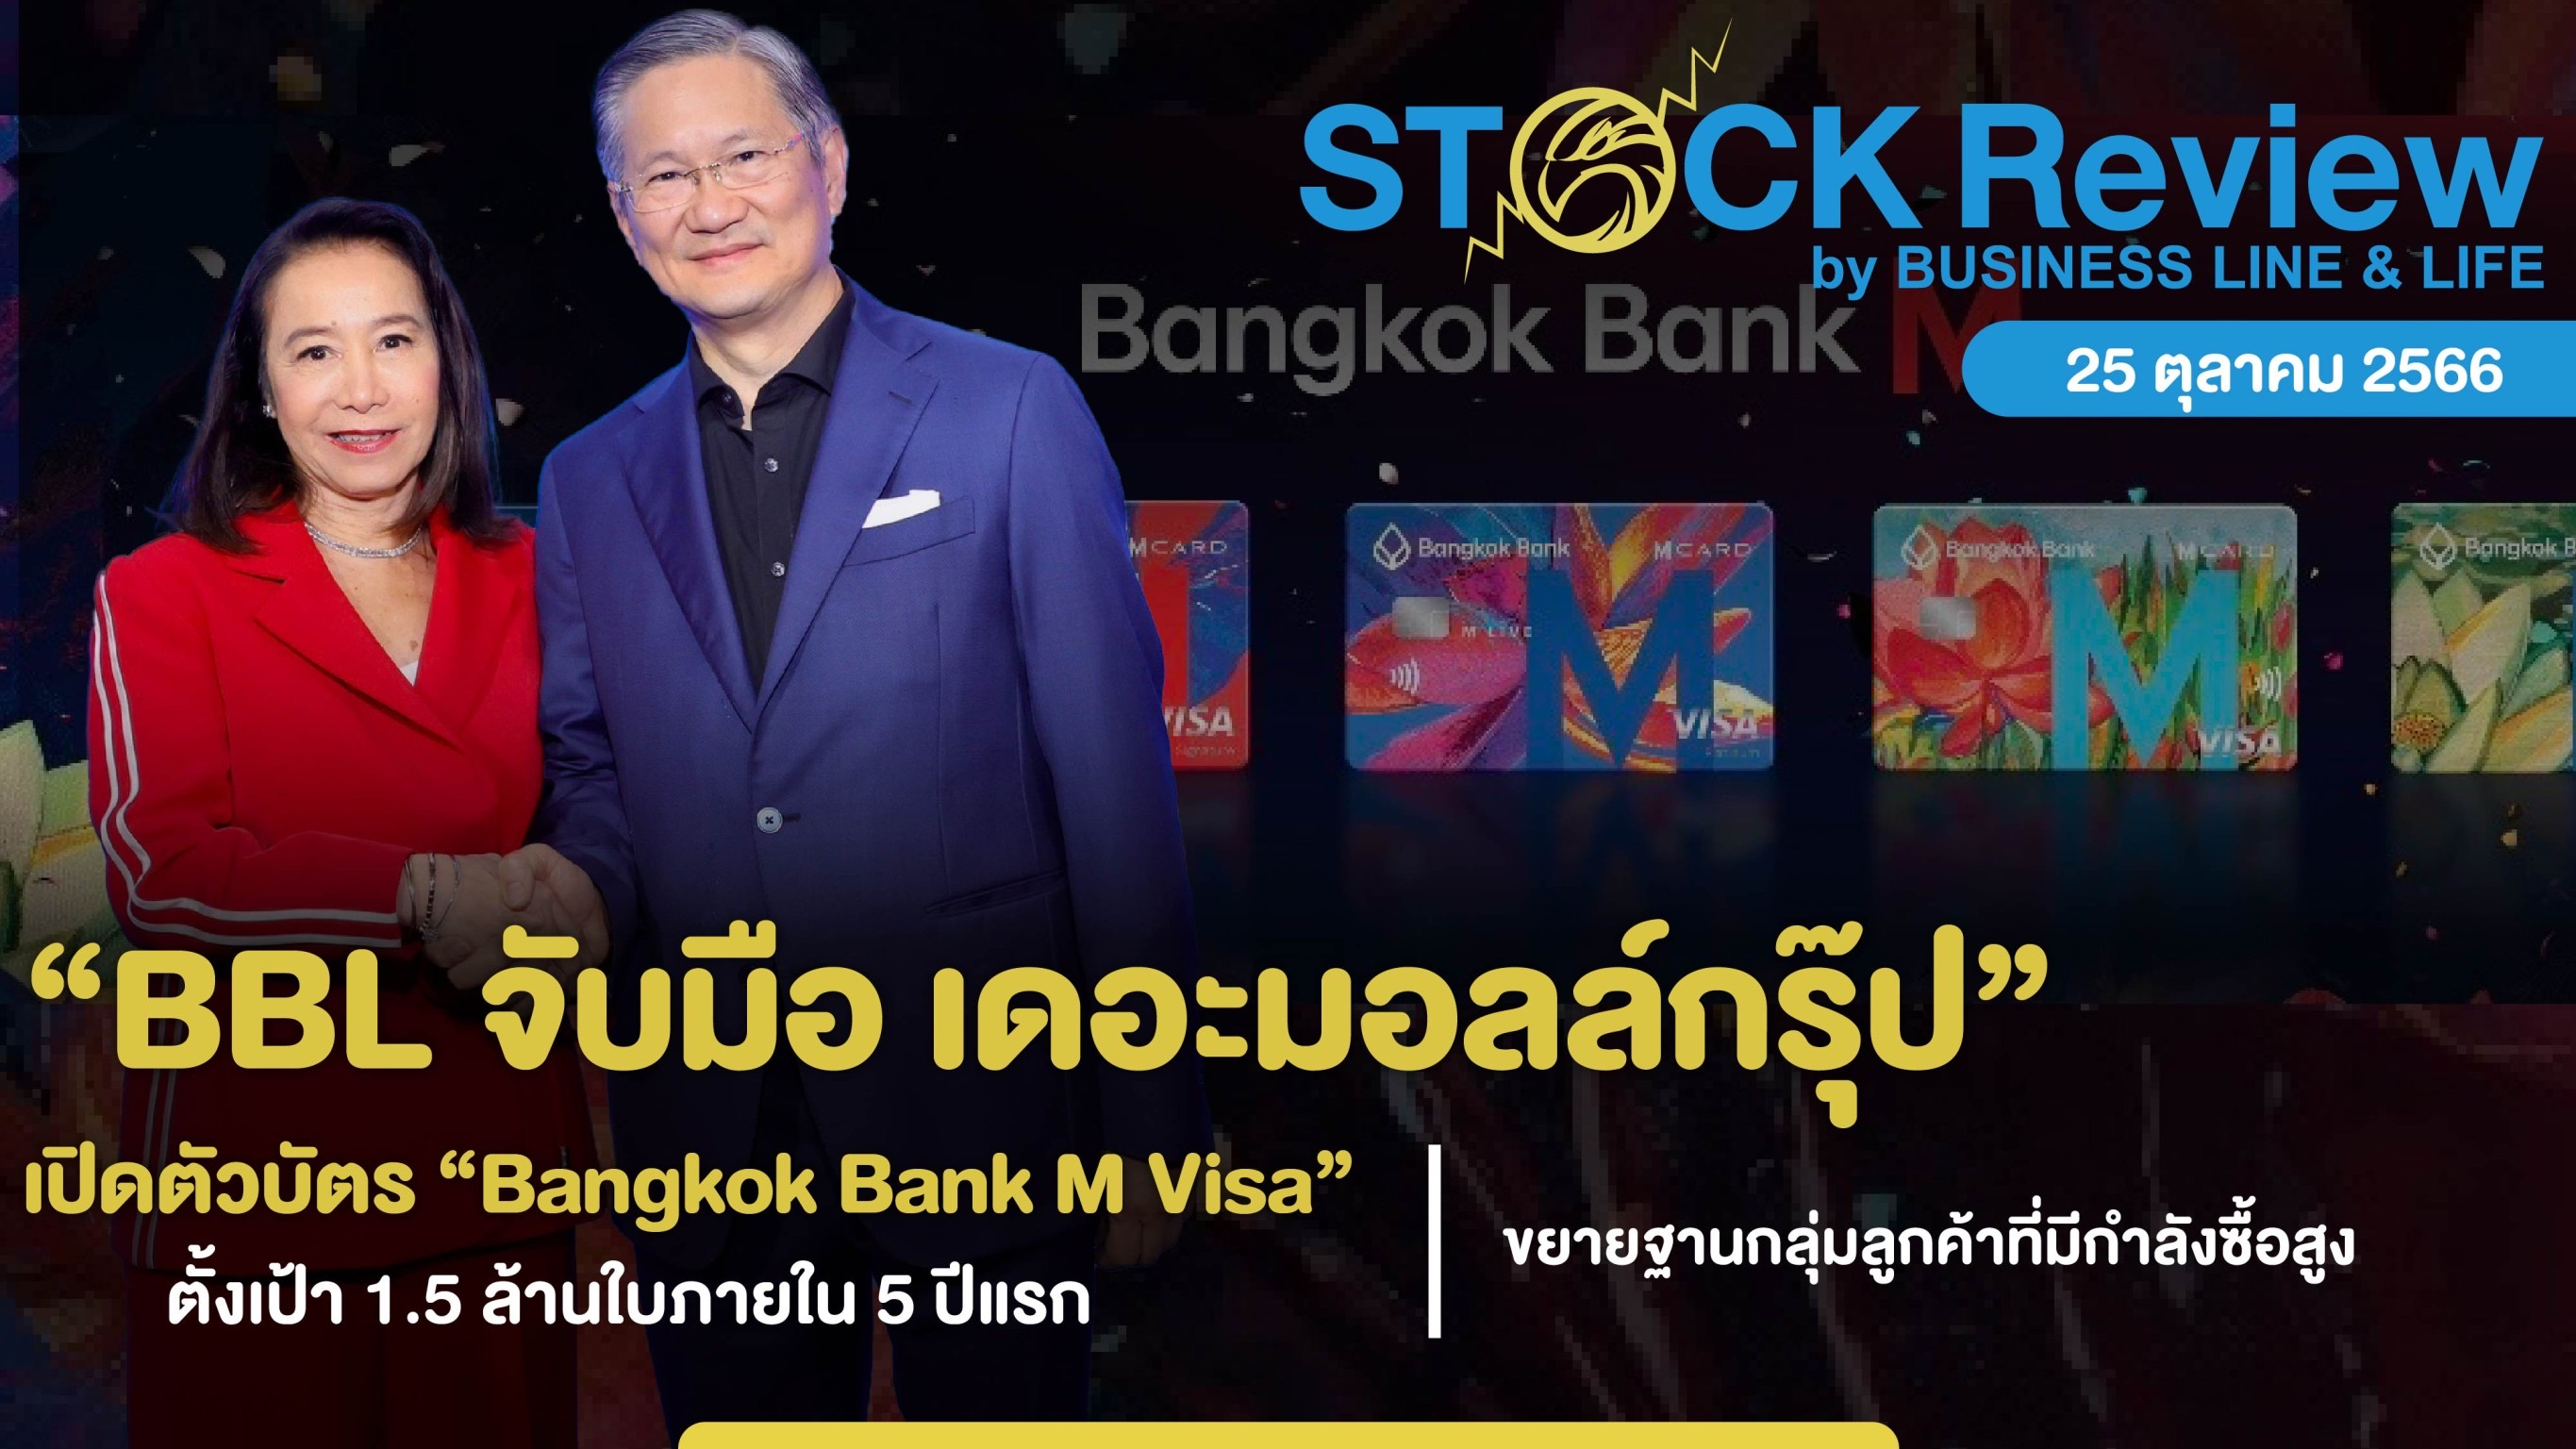 BBL จับมือเดอะมอลล์กรุ๊ป เปิดตัวบัตร “Bangkok Bank M Visa” ตั้งเป้า 1.5 ล้านใบใน 5 ปี